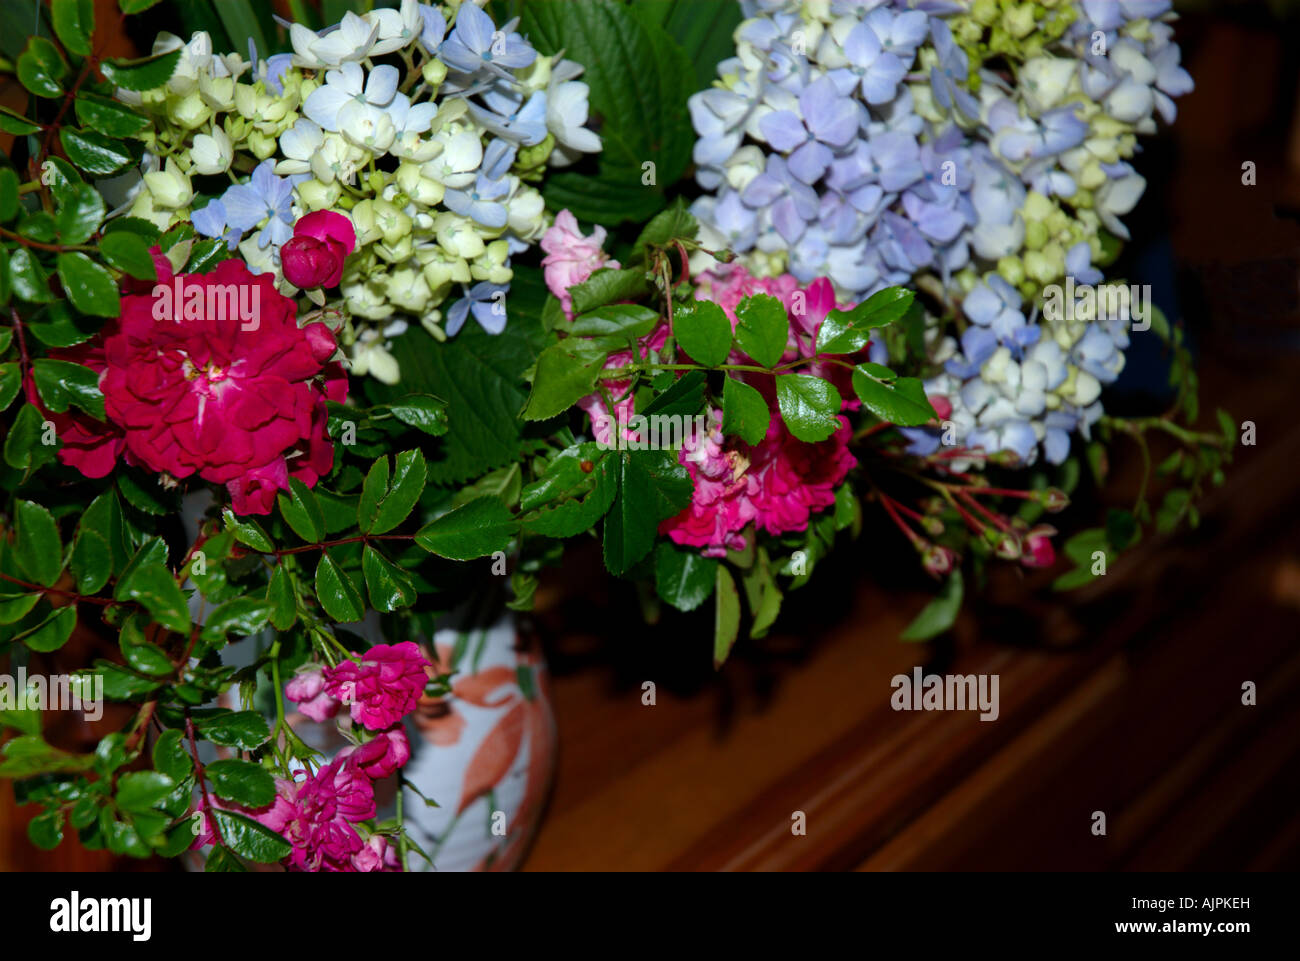 Vase of garden flowers Stock Photo